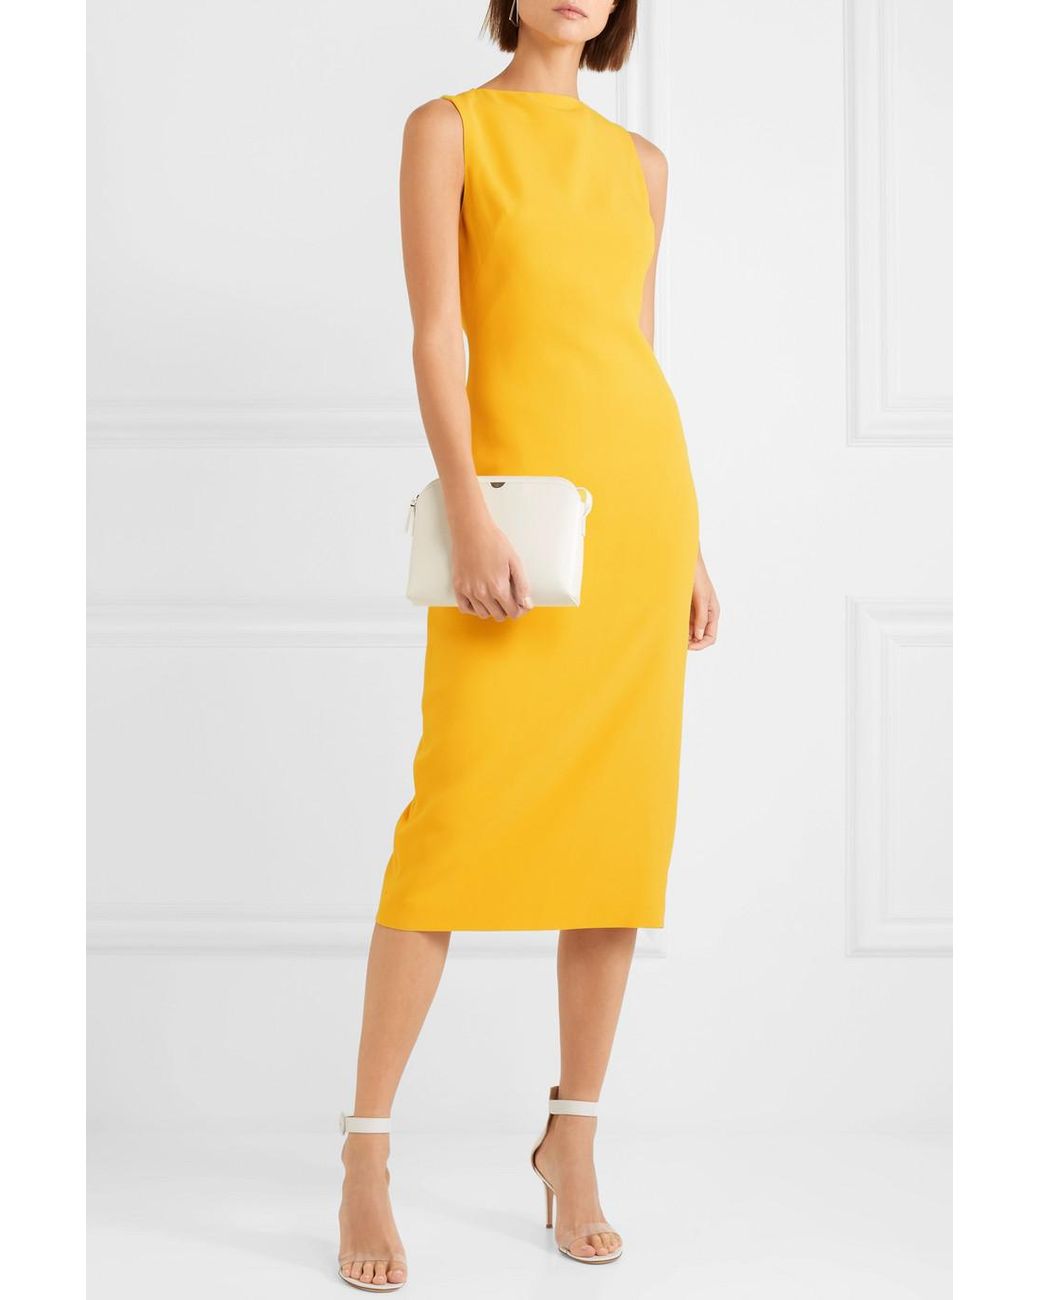 https://cdna.lystit.com/1040/1300/n/photos/net-a-porter/92b95f09/brandon-maxwell-bright-yellow-Crepe-Midi-Dress.jpeg